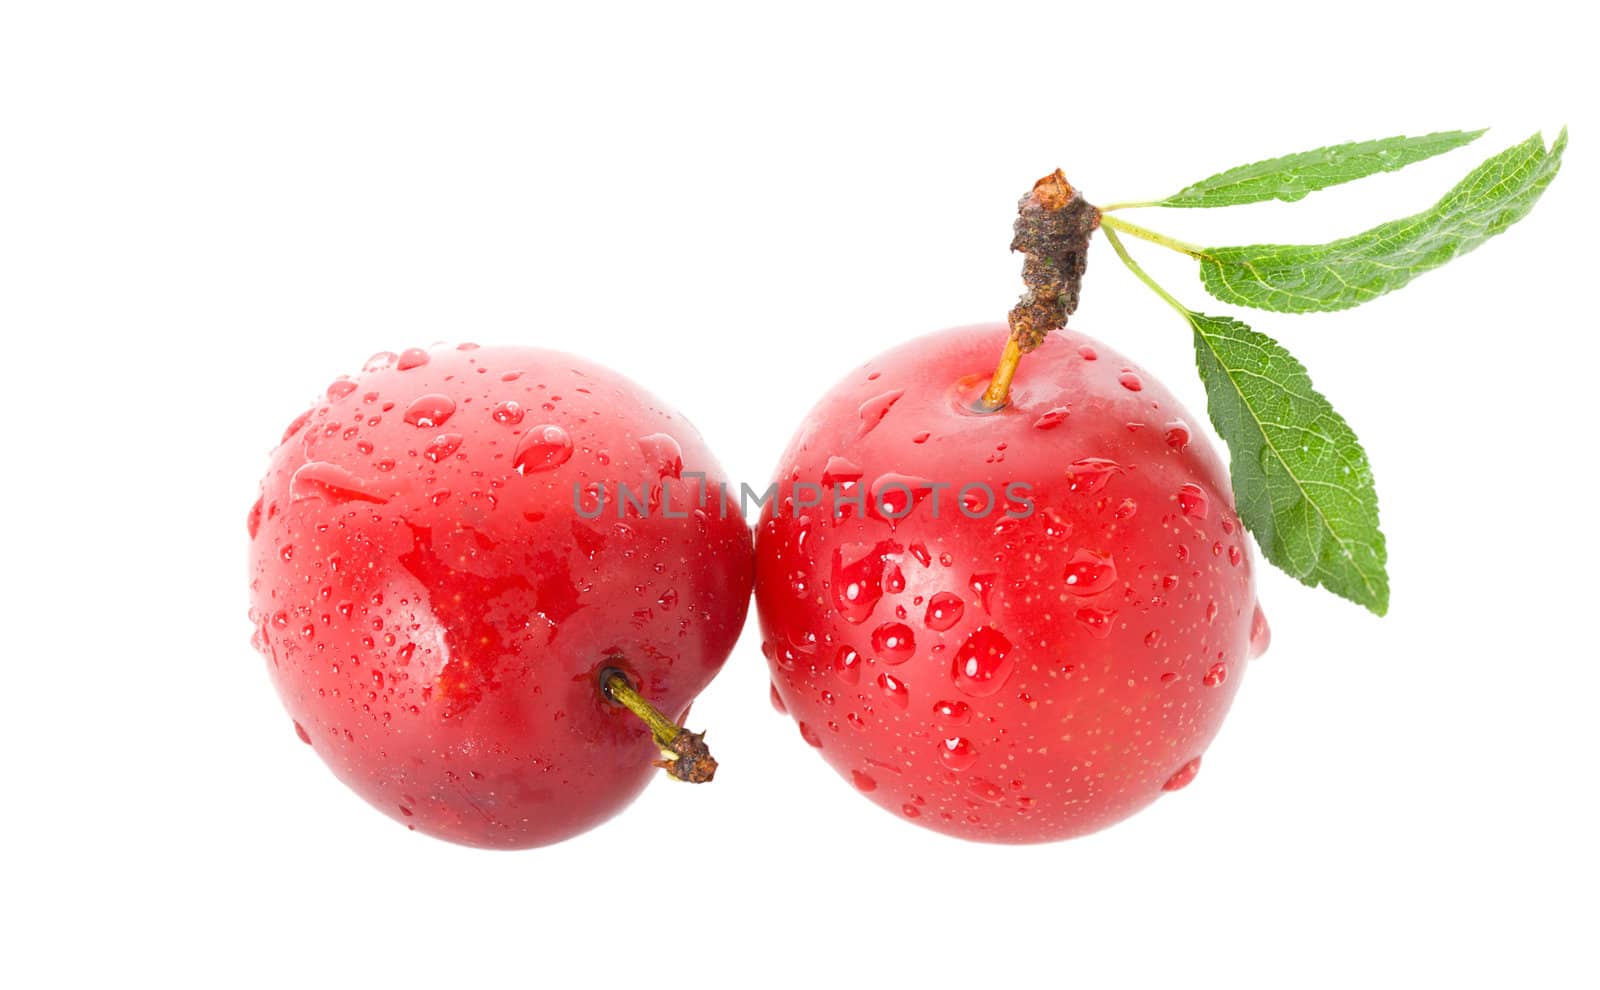 wet ripe plums by Alekcey